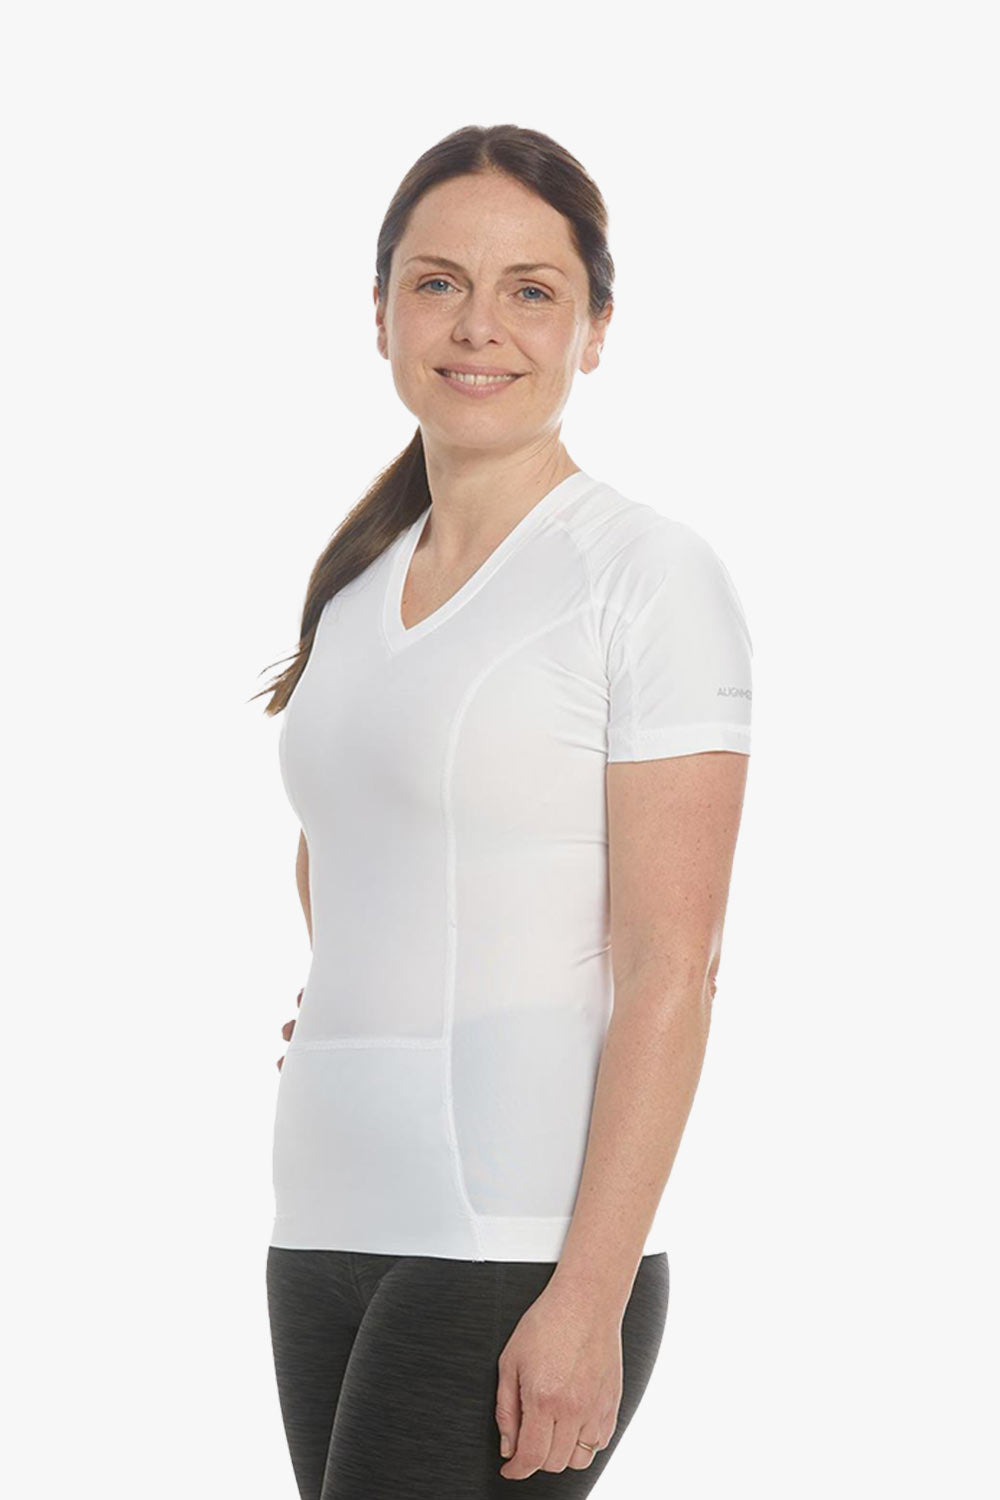 Women's Posture Shirt™ - White